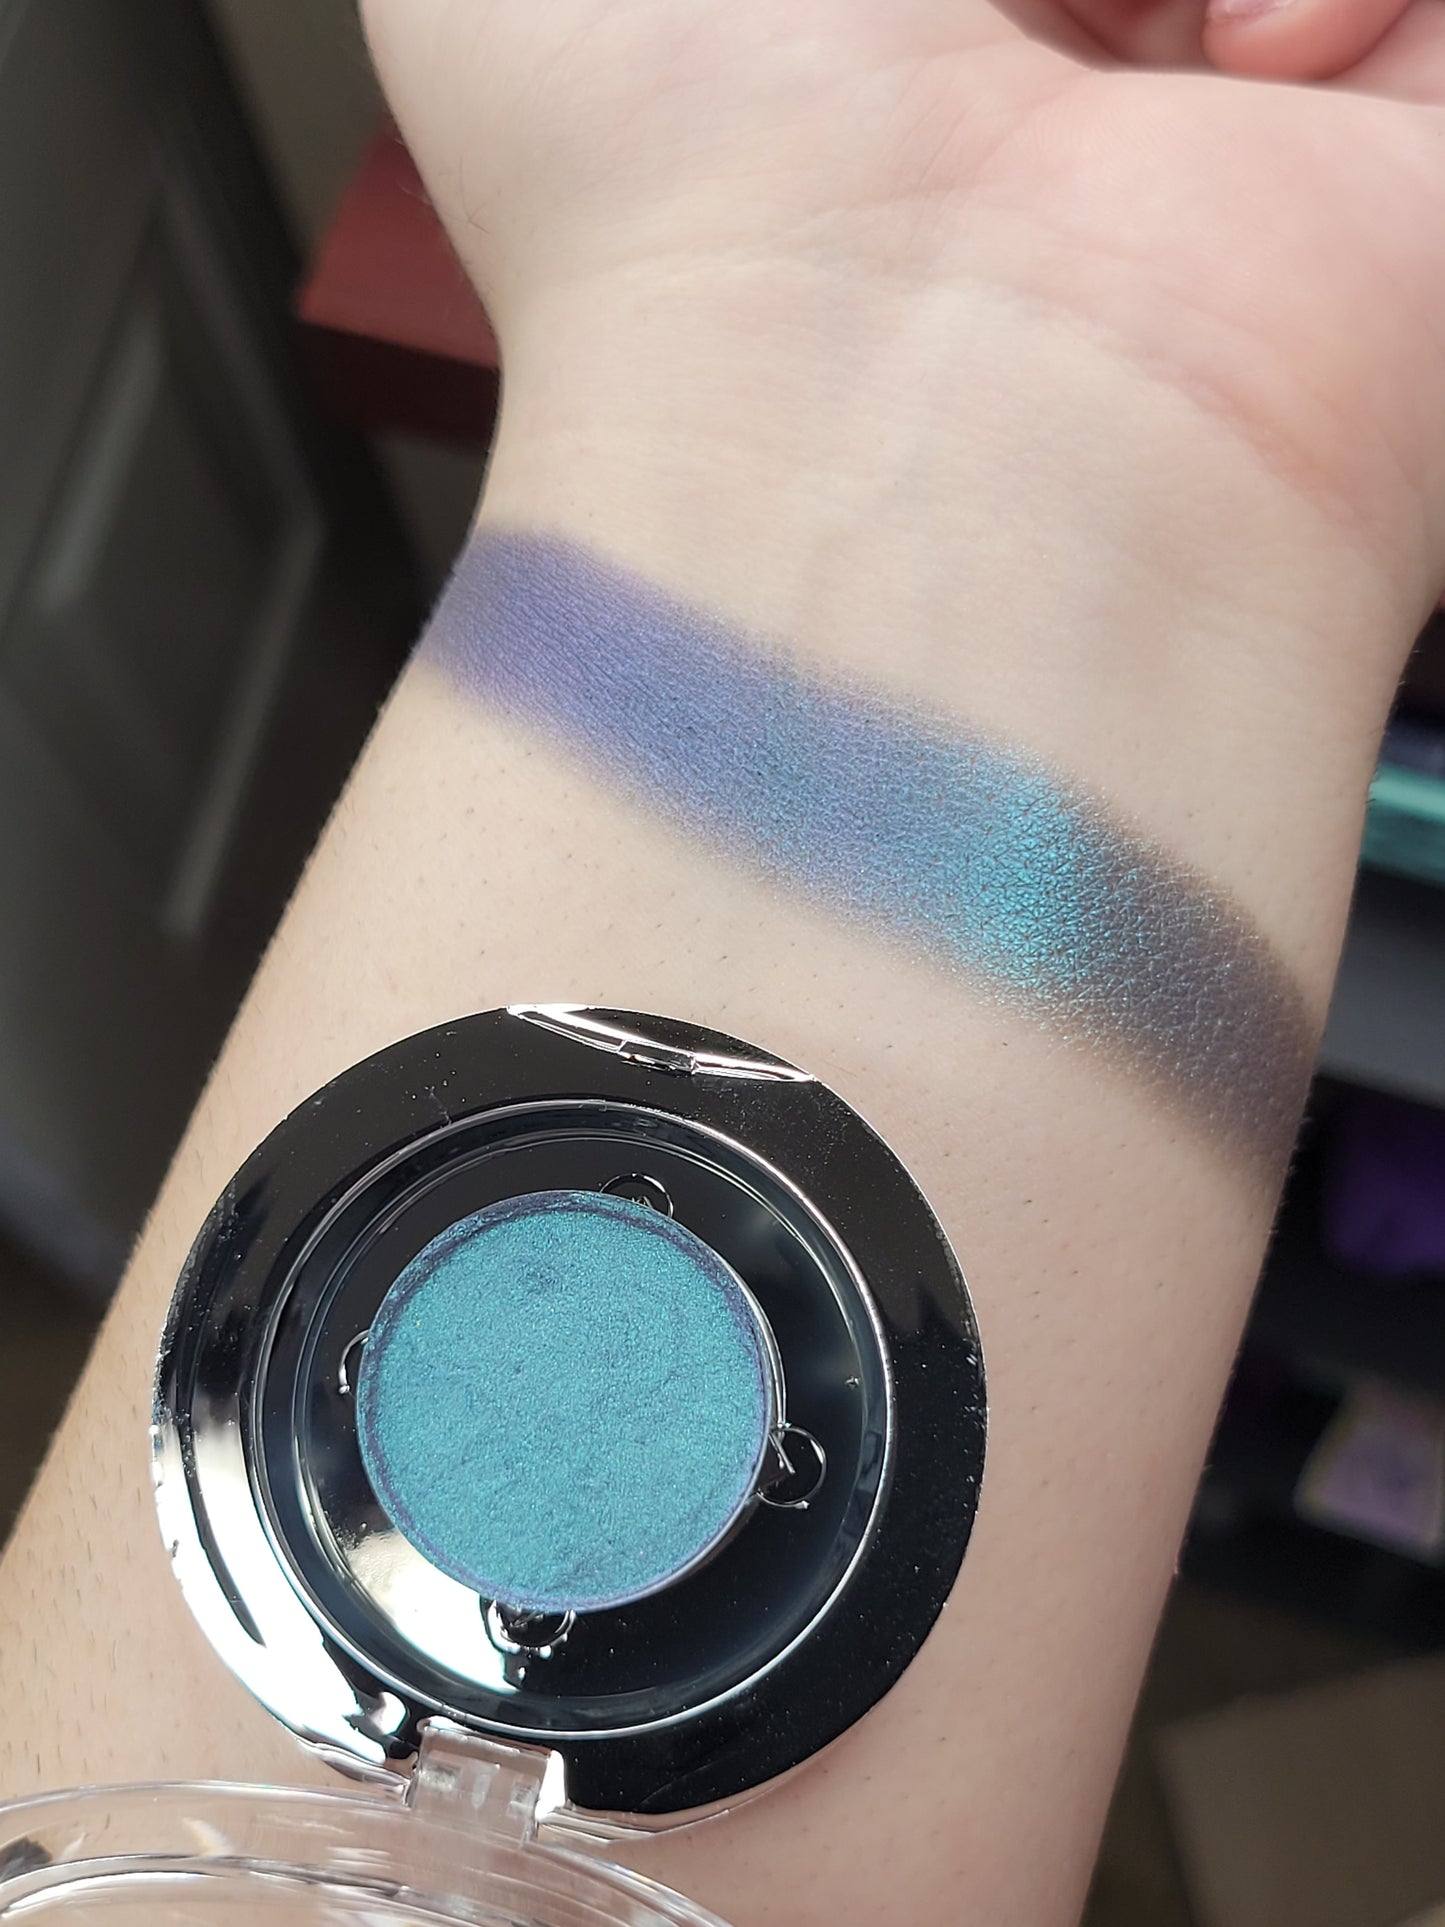 Hydra - Eyeshadow Multichrome Turquoise Green Blue Violet